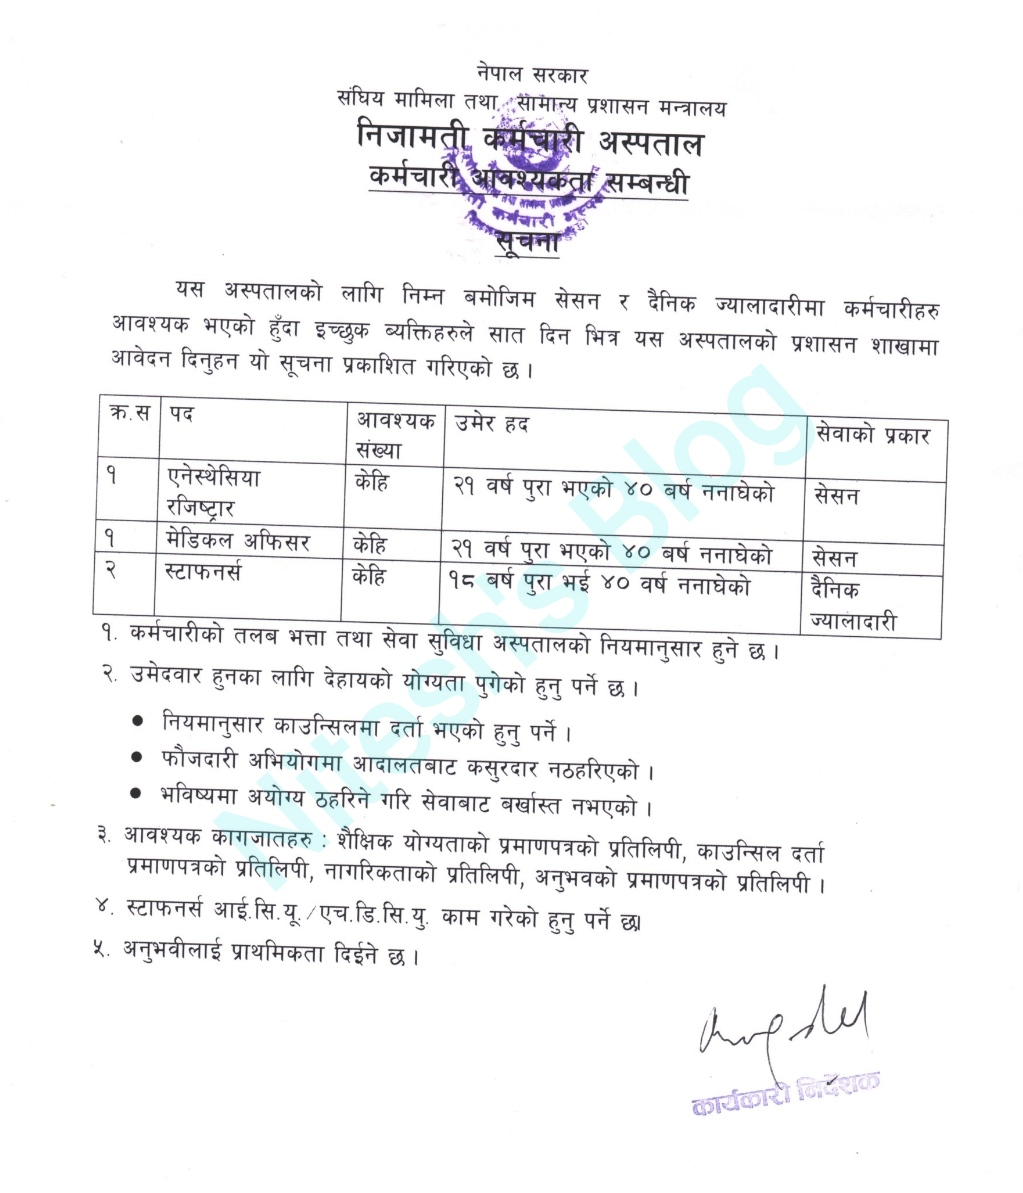 Job Vacancy in Kathmandu Civil Service Hospital